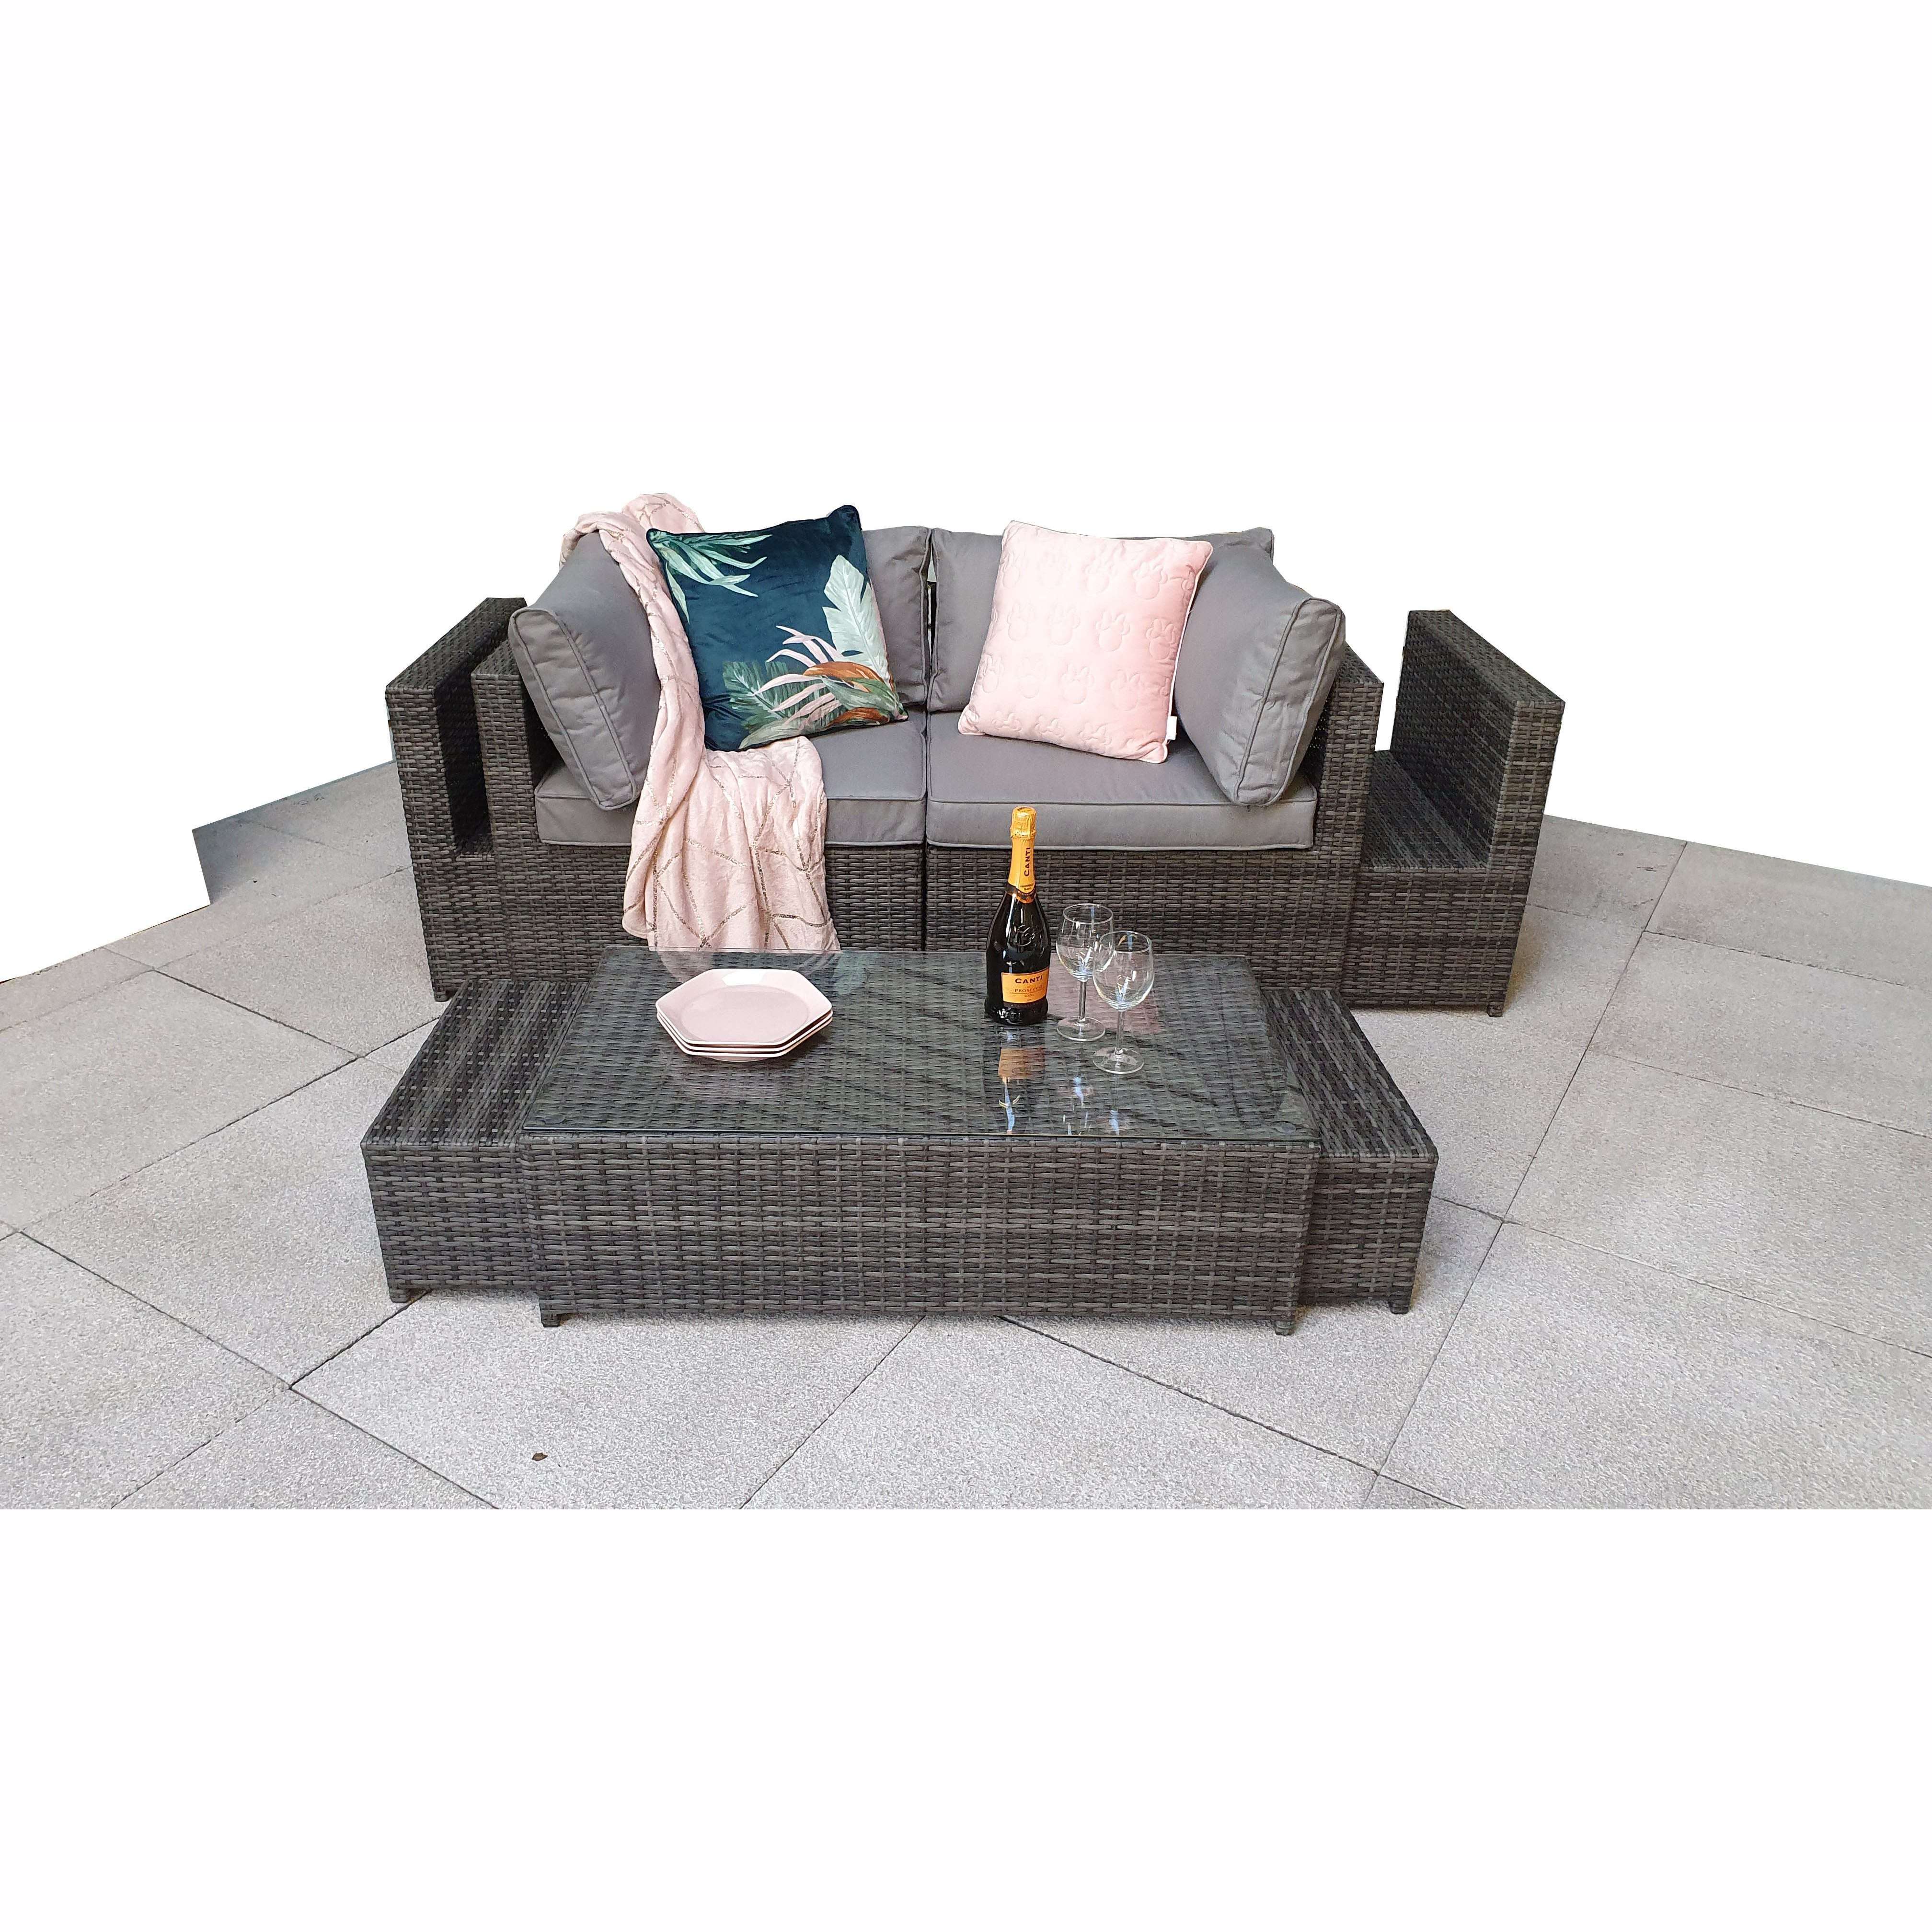 Exceptional Garden:Signature Weave Chelsea Modular Sofa Set